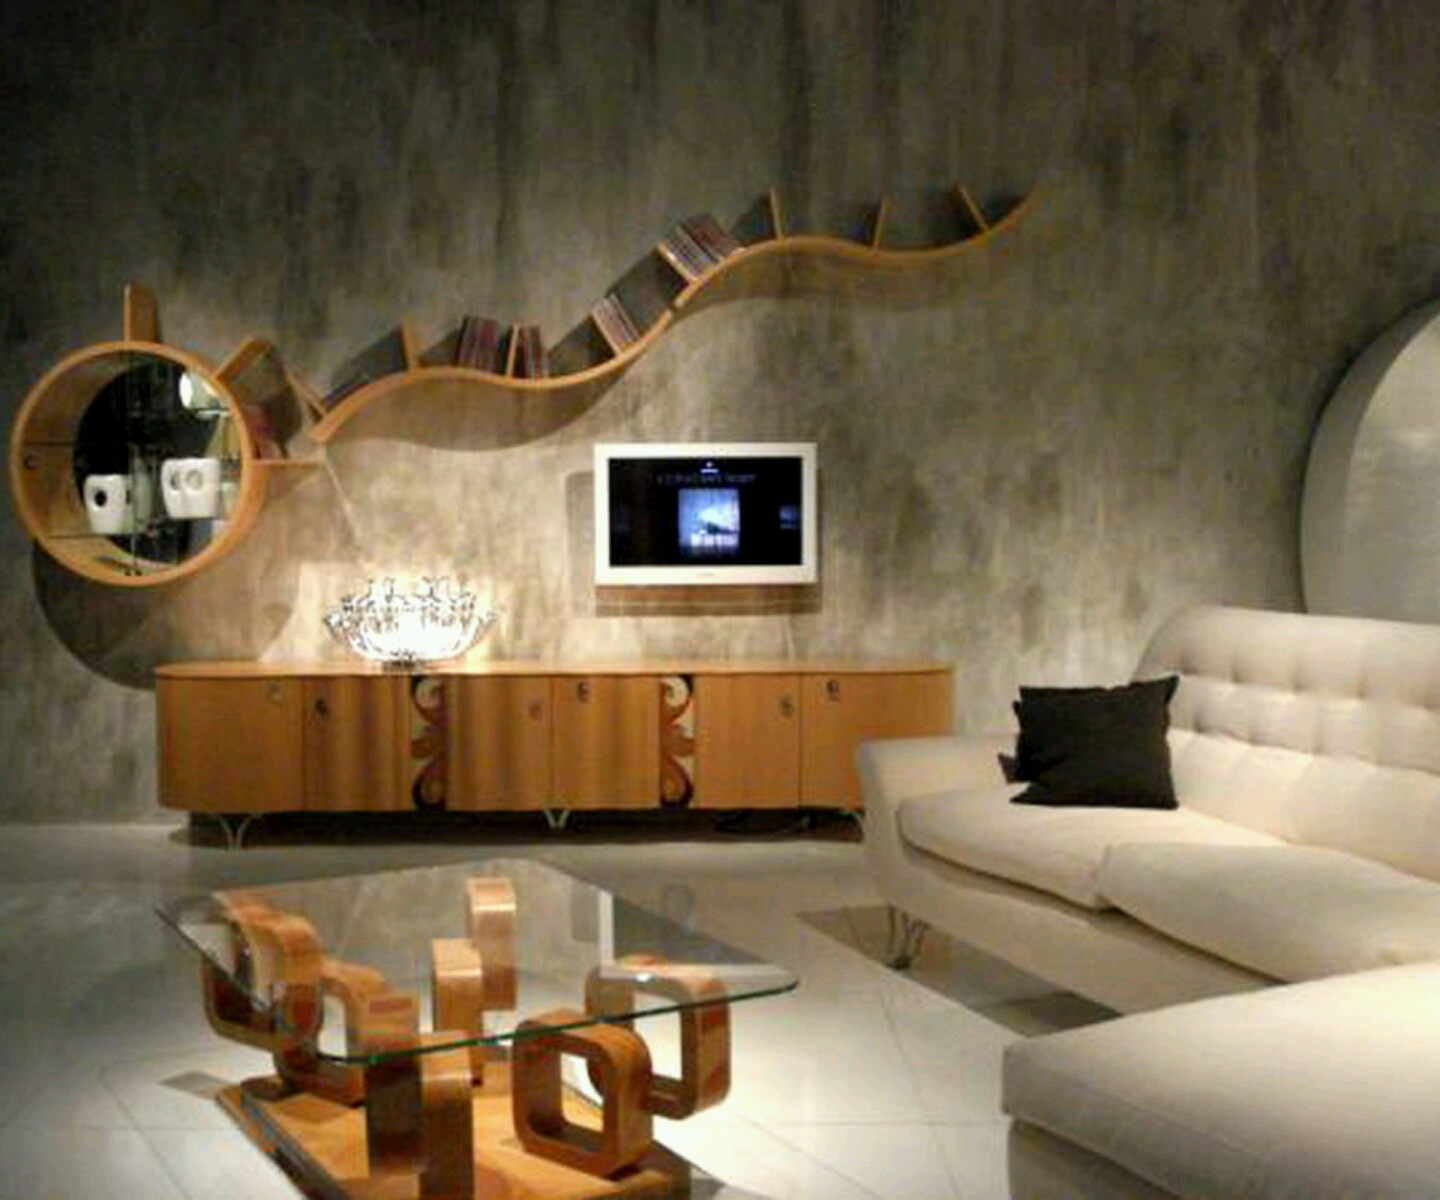 https://blogger.googleusercontent.com/img/b/R29vZ2xl/AVvXsEhHt8GNPC7JHsFGMGwi2V5m9wL6sa7WQqXC3MaA9KxxPjVl1AQtiC3TdXxZYIdTW8jsEaeyHFyxvzTqnCK6XPSS2MGIwzyDz8Bh4cBQEjuj7w1Jog1ZWgtUtvWF3wTwjgQ-DgIfFRv_M9k/s1600/Modern+living+room+designs+ideas..jpg